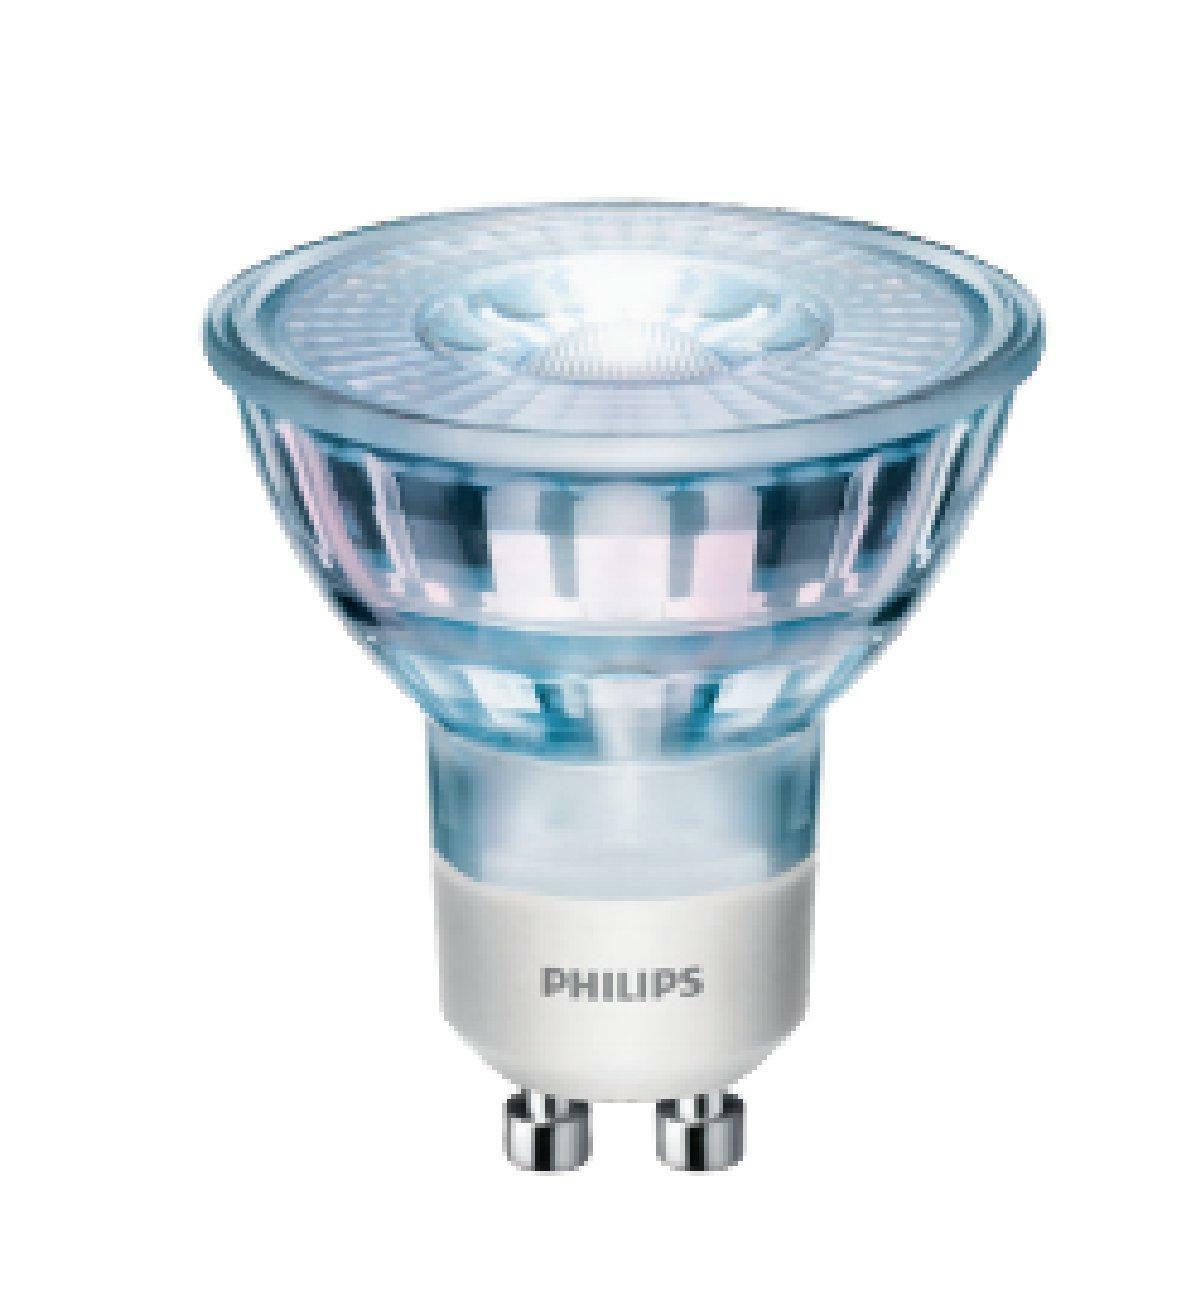 philips philips lampade professionali lampada led classic corepro ledspot 4.6-50w gu10 827 36d clagu105082736